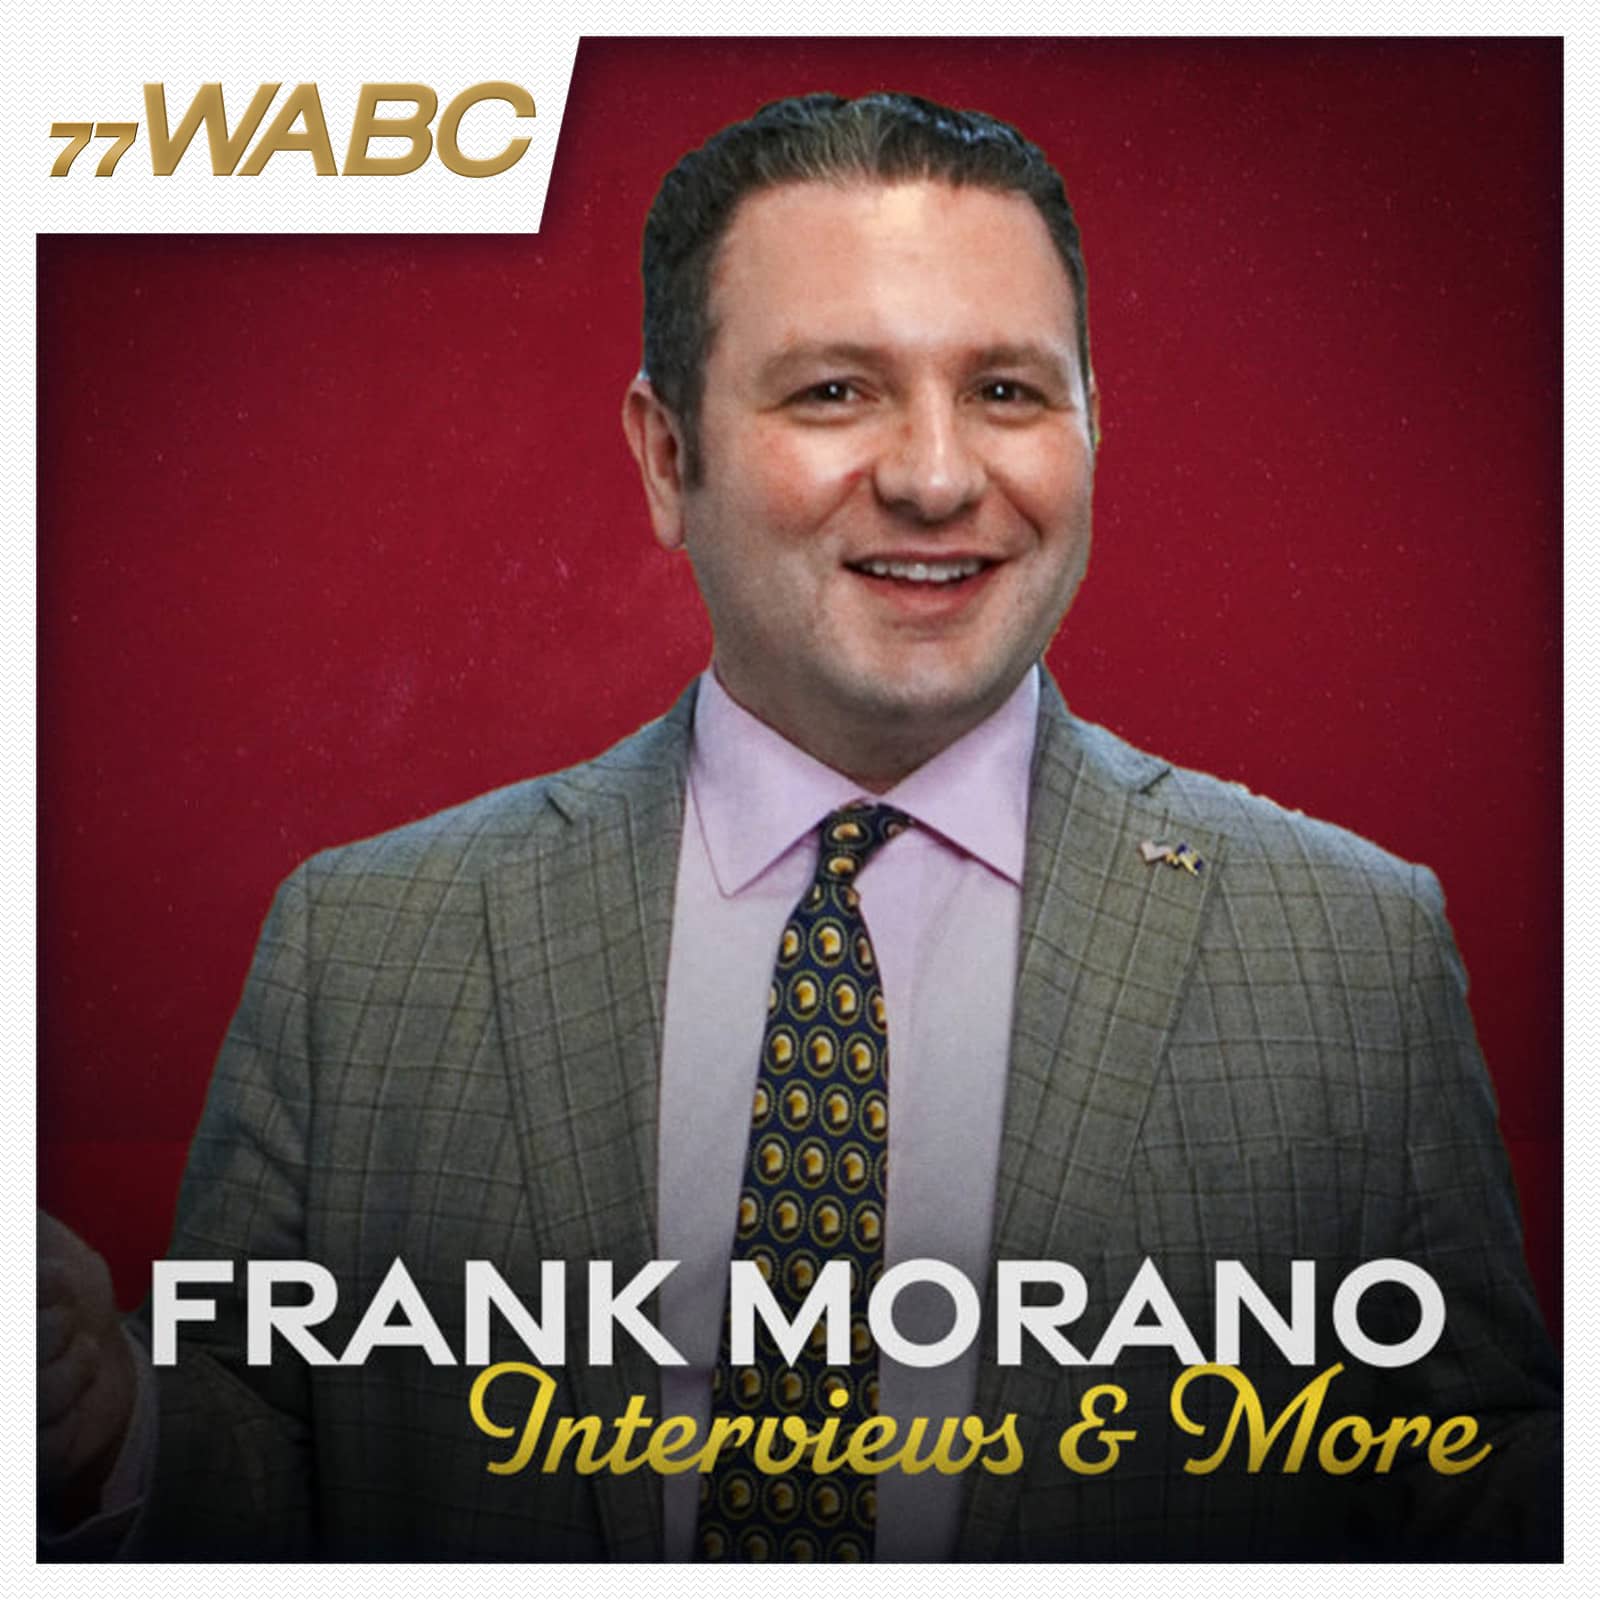 frank-morano-interviews-and-more-podcast-new-logo-318